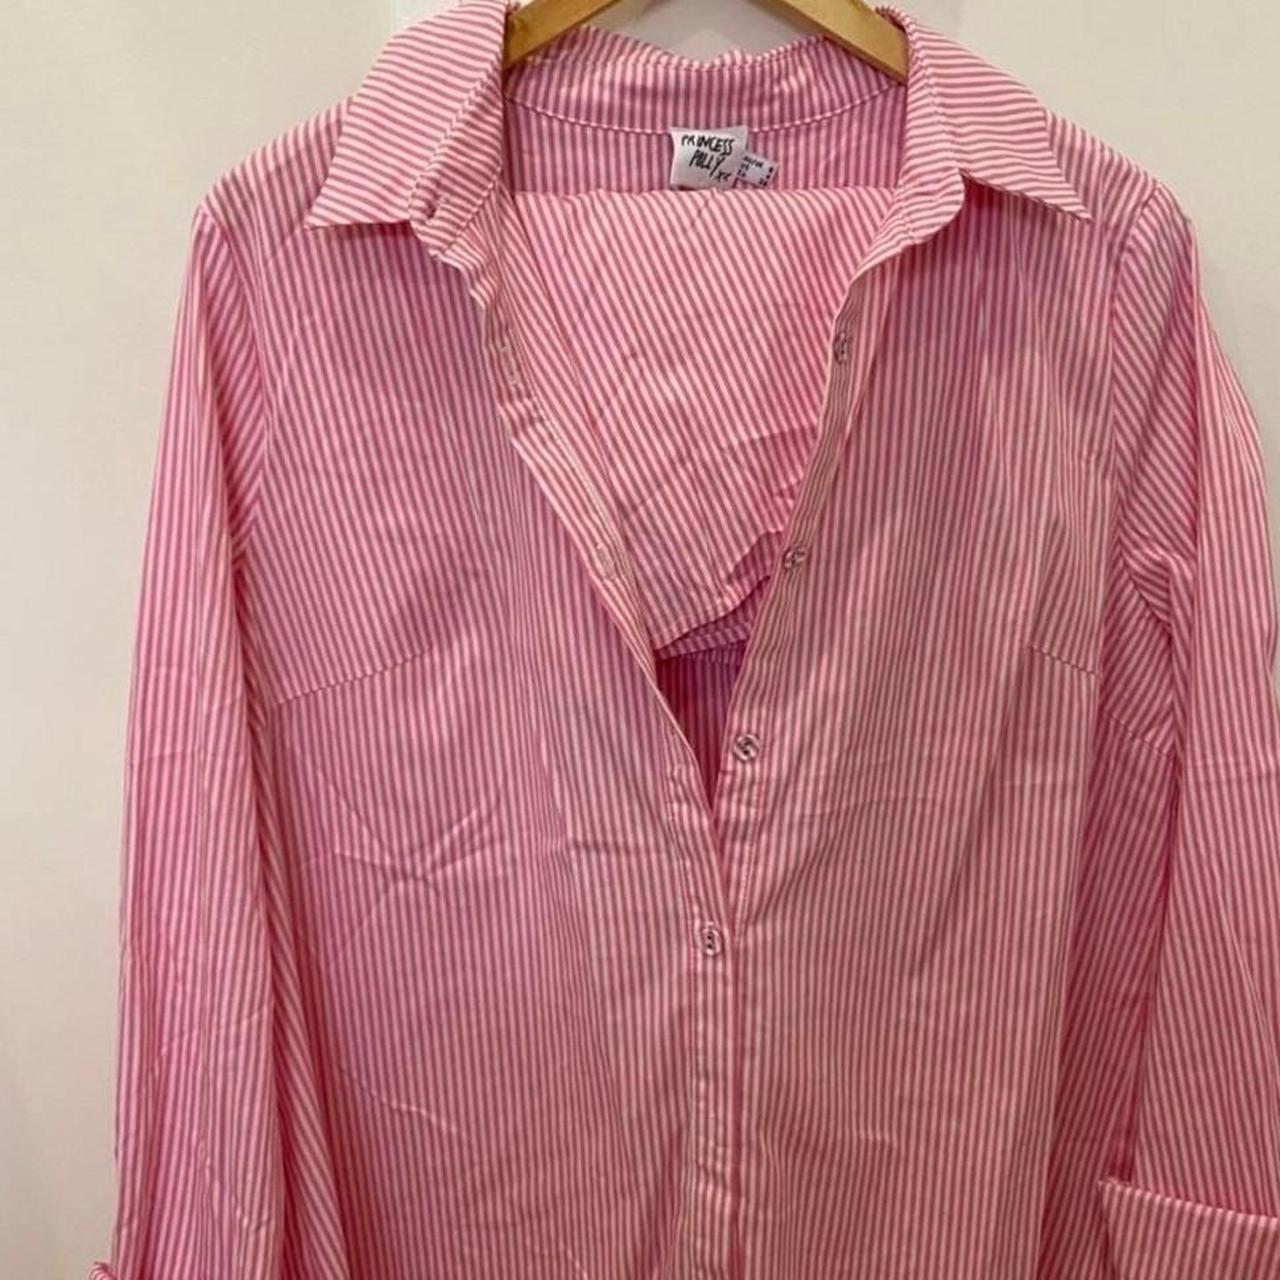 Repop Princess Polly Pink Stripped Set Shirt +... - Depop